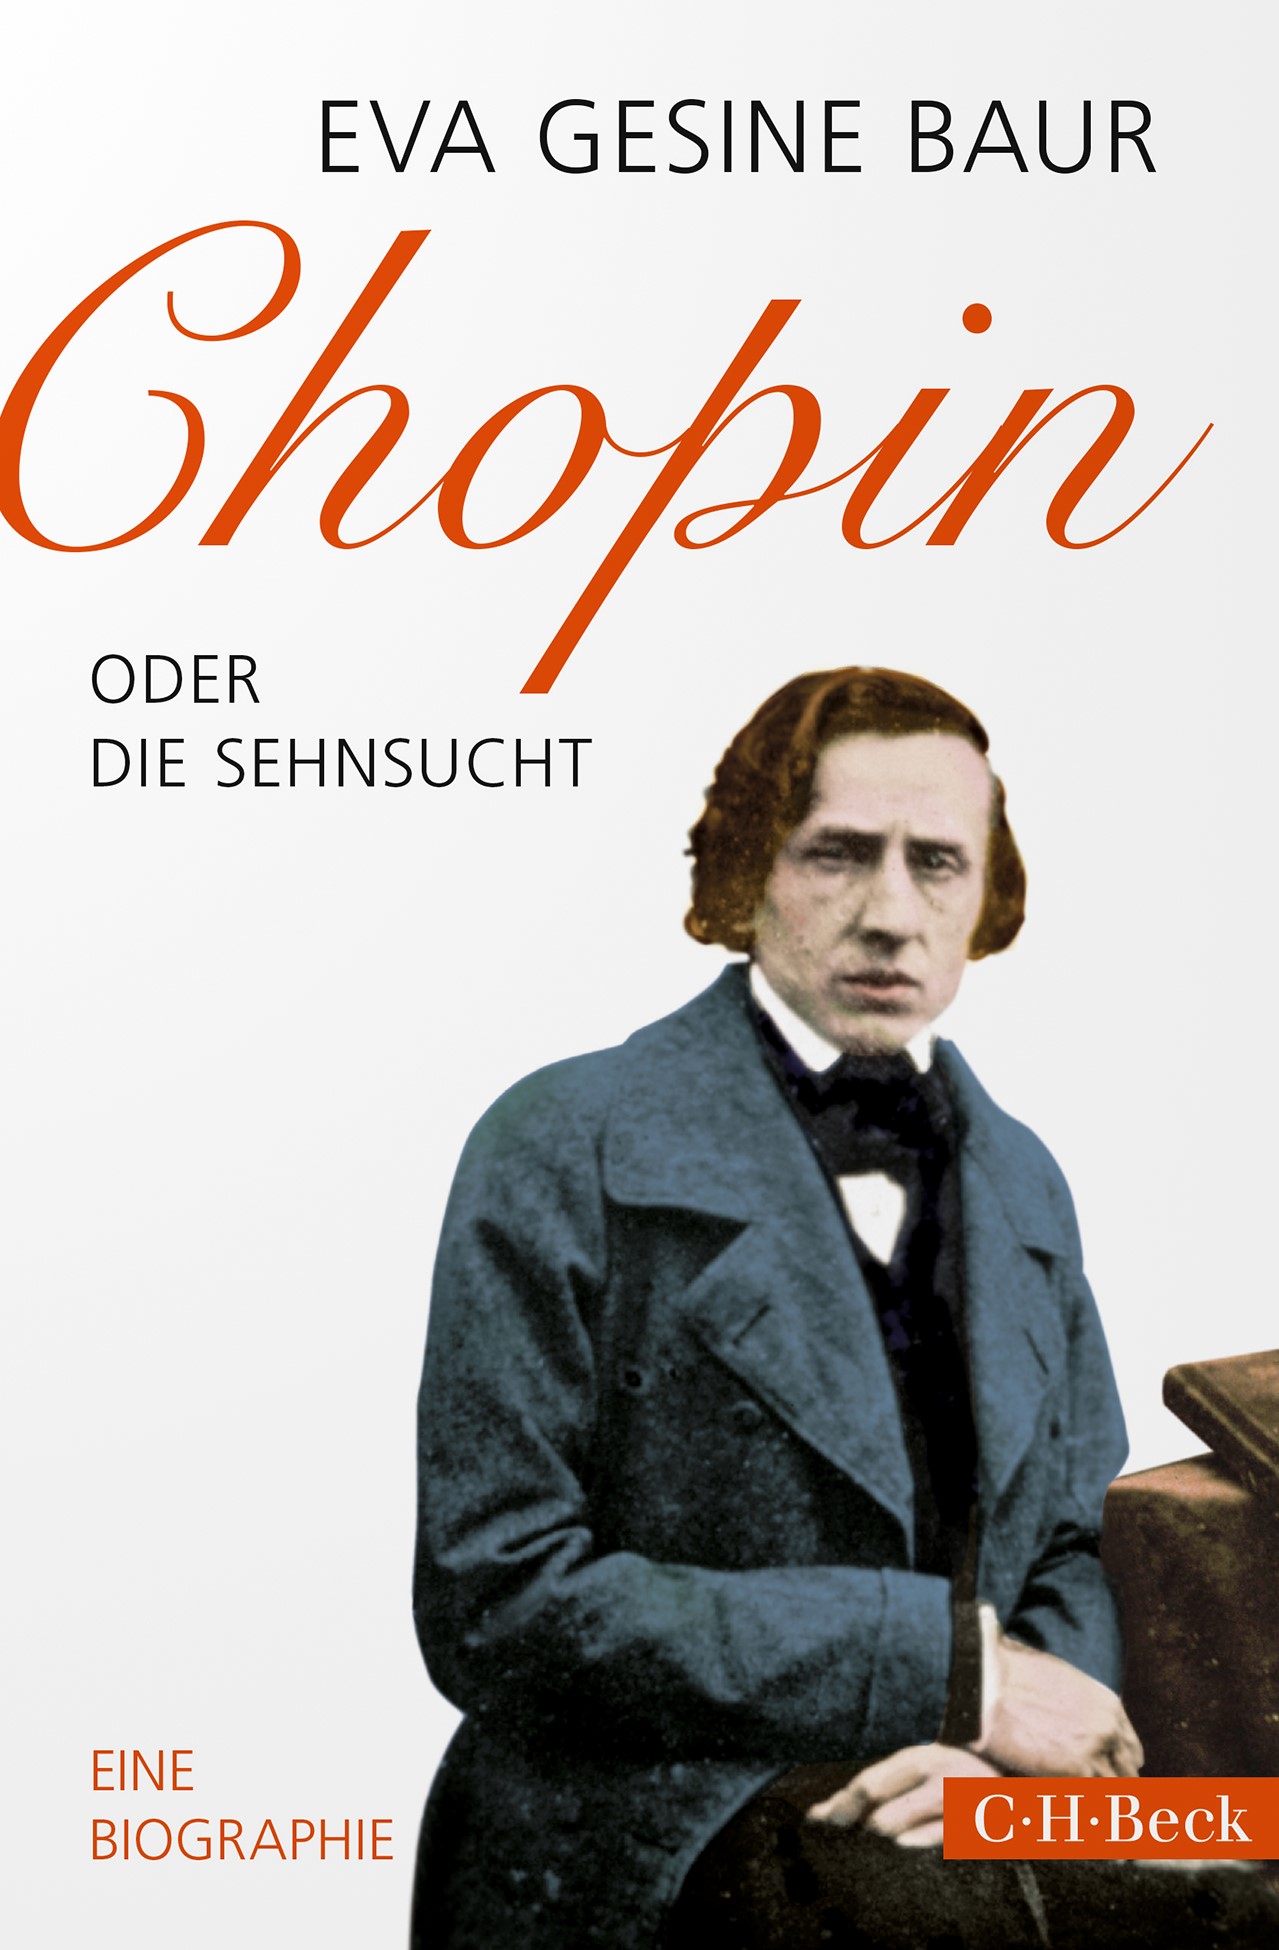 Cover: Baur,  Eva Gesine, Chopin